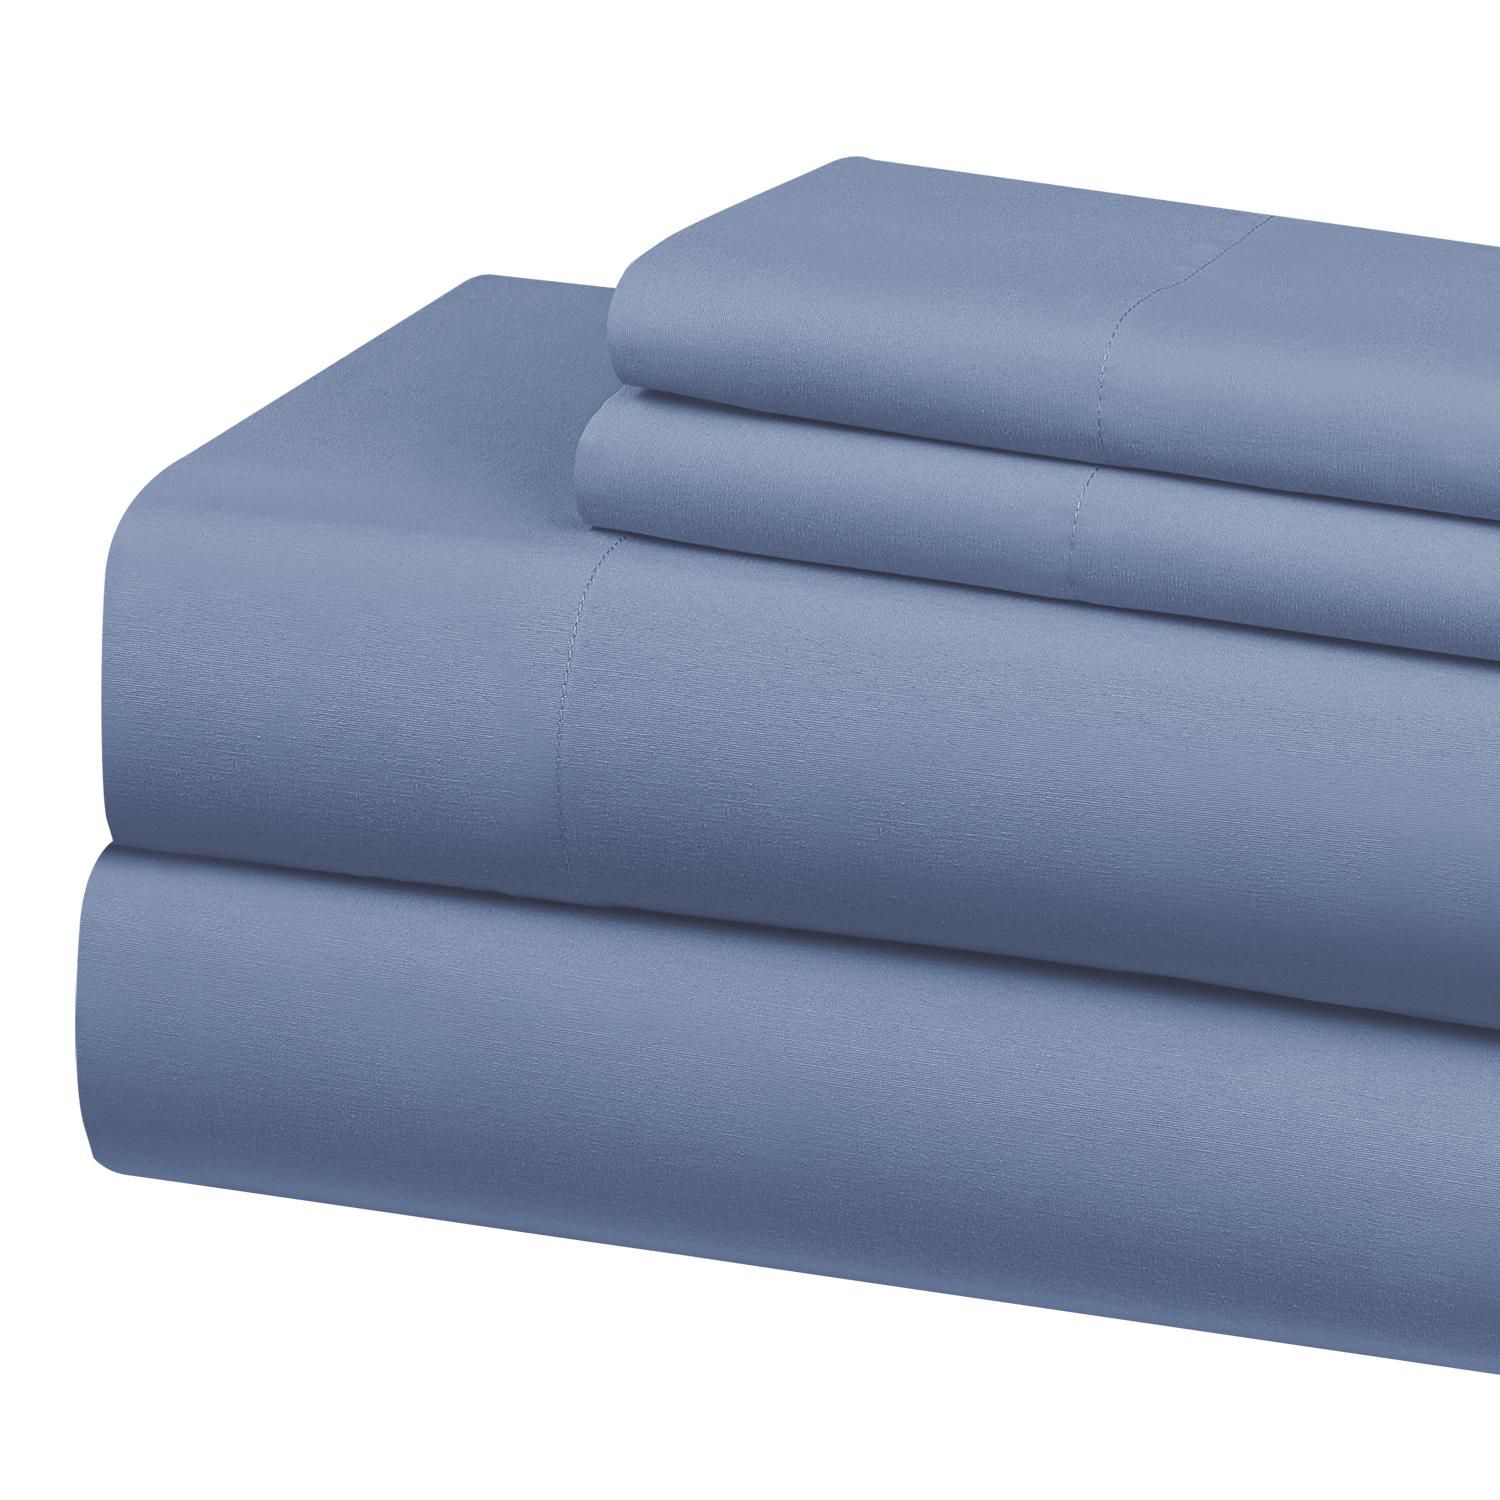 MAINSTAYS 250 Thread Count Cotton Rich Blue Sheet Set | Walmart Canada